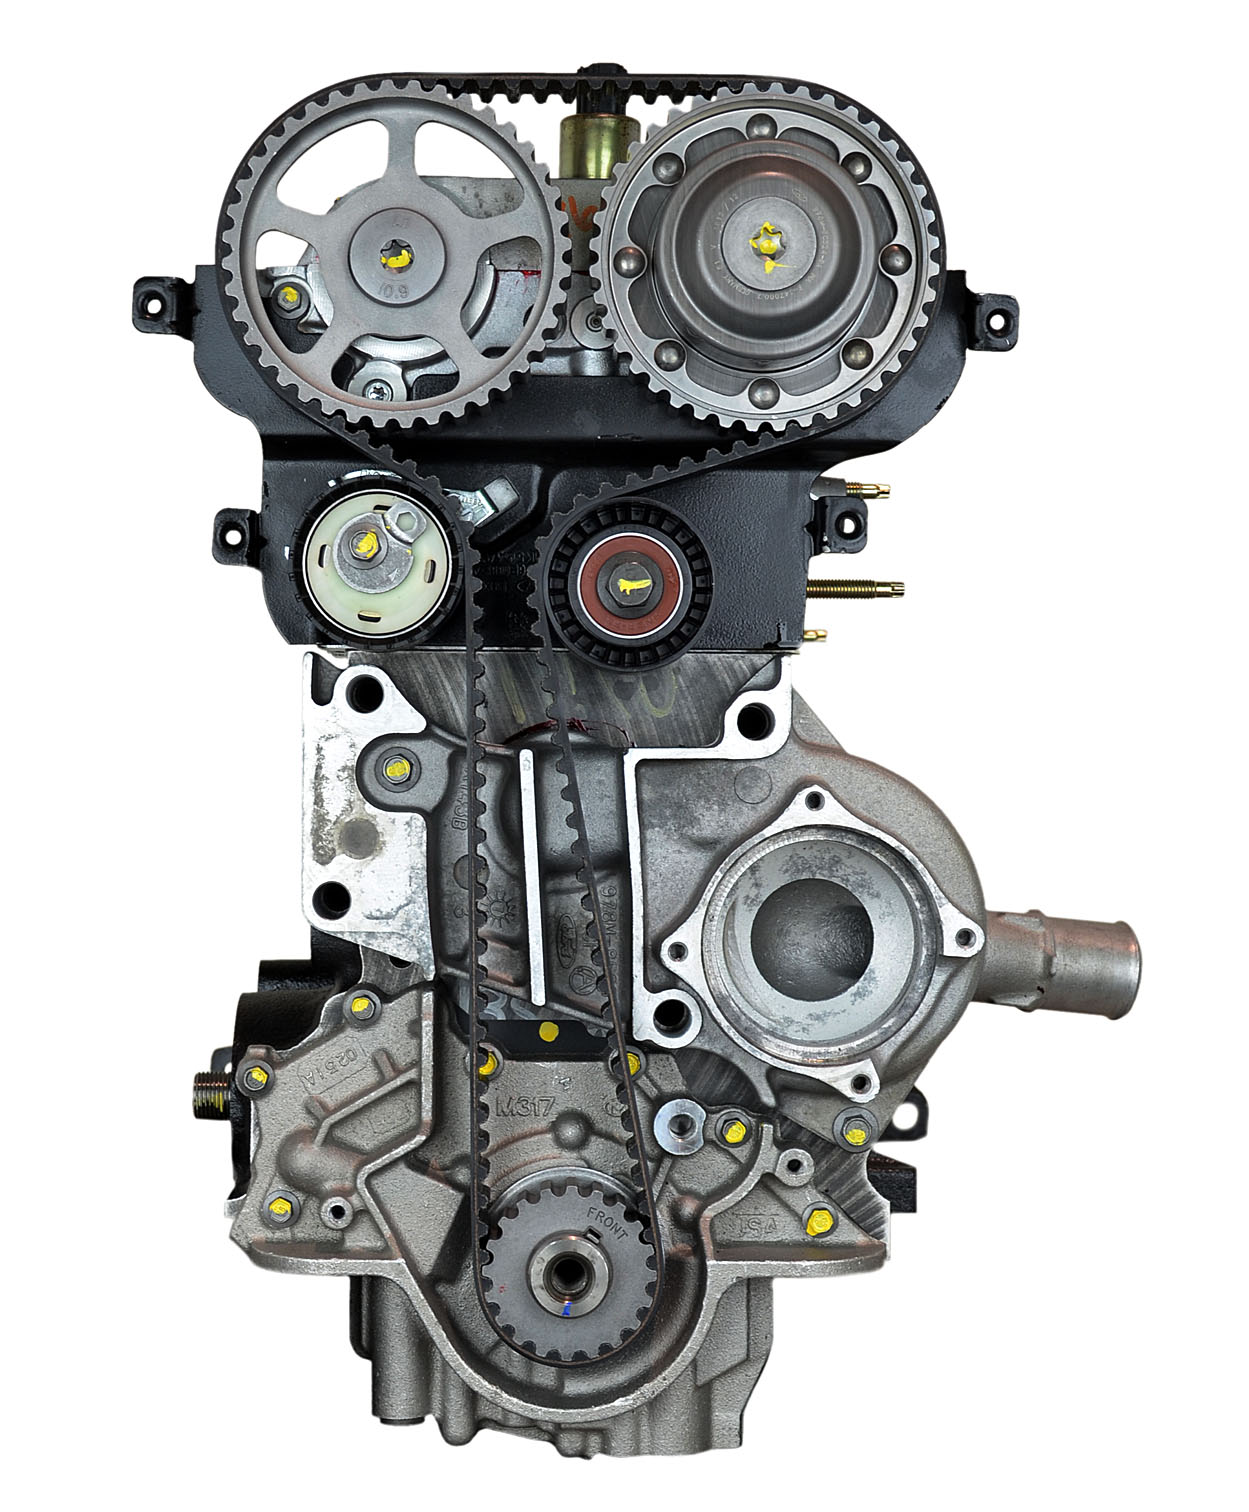 Ford 2.0L ZTEC DOHC L4 Remanufactured Engine - 2000-2002